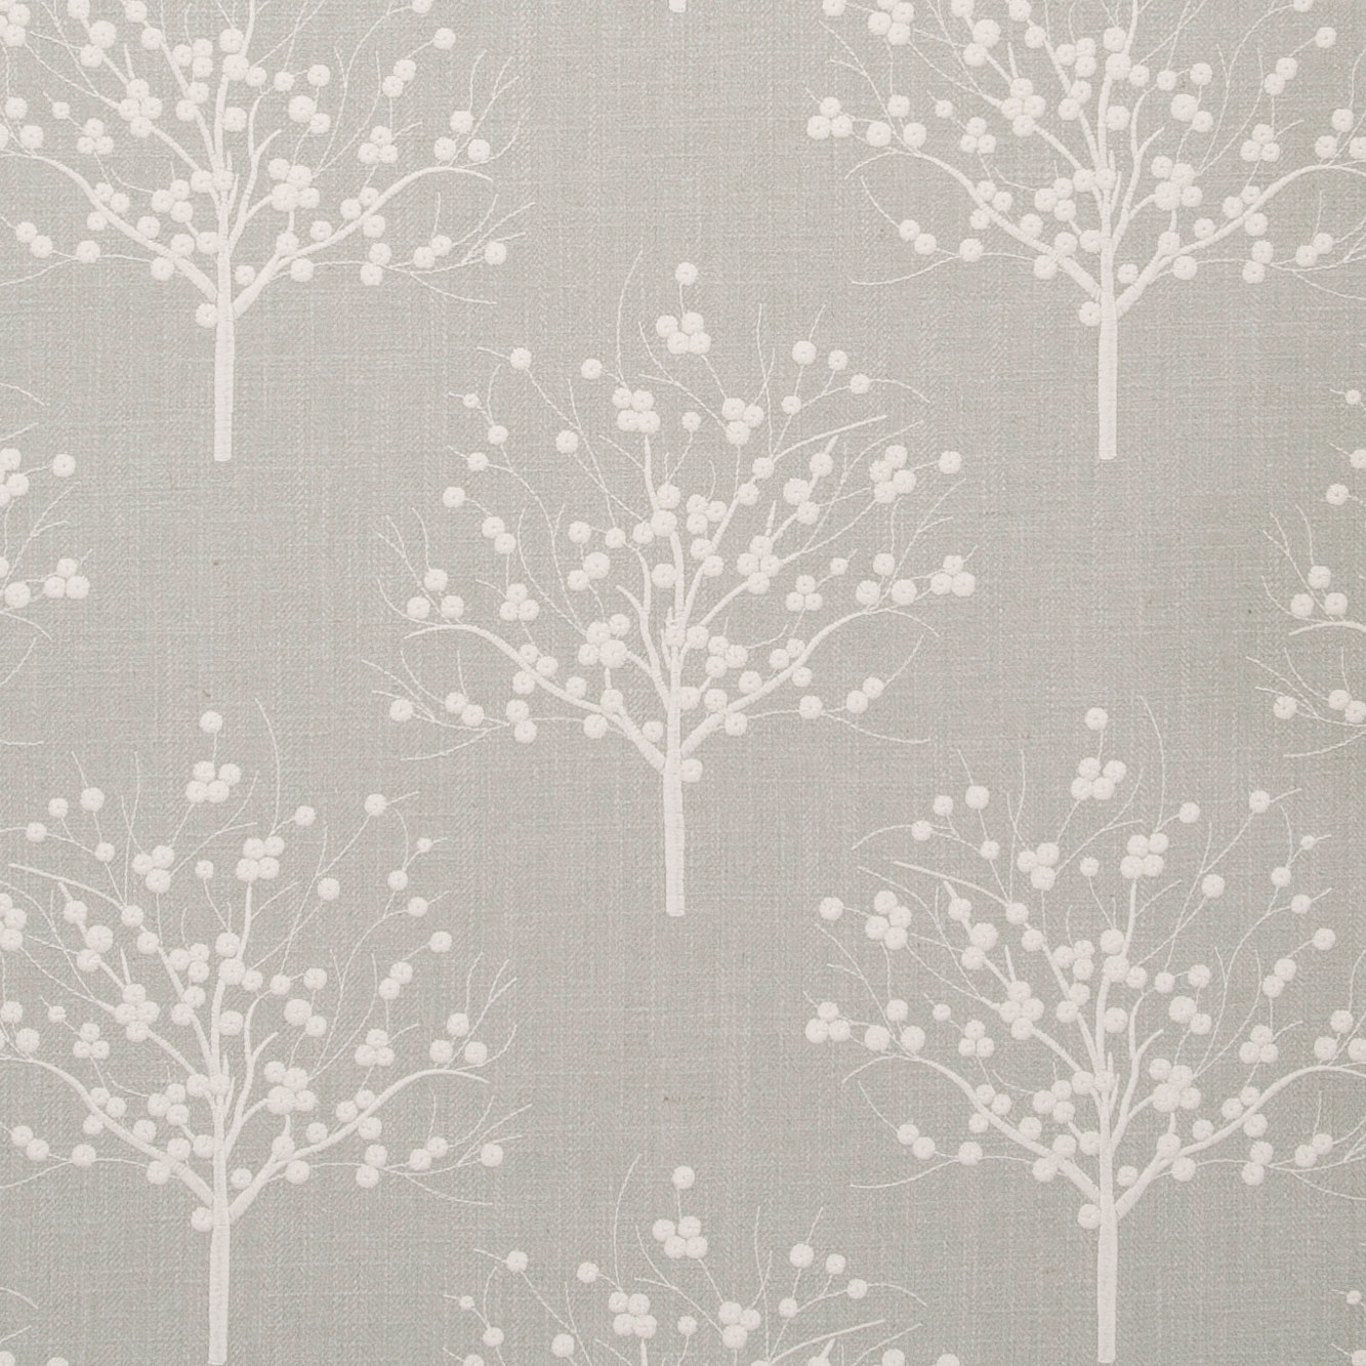 Bowood Fabric by Clarke & Clarke - F0733/02 - Duckegg